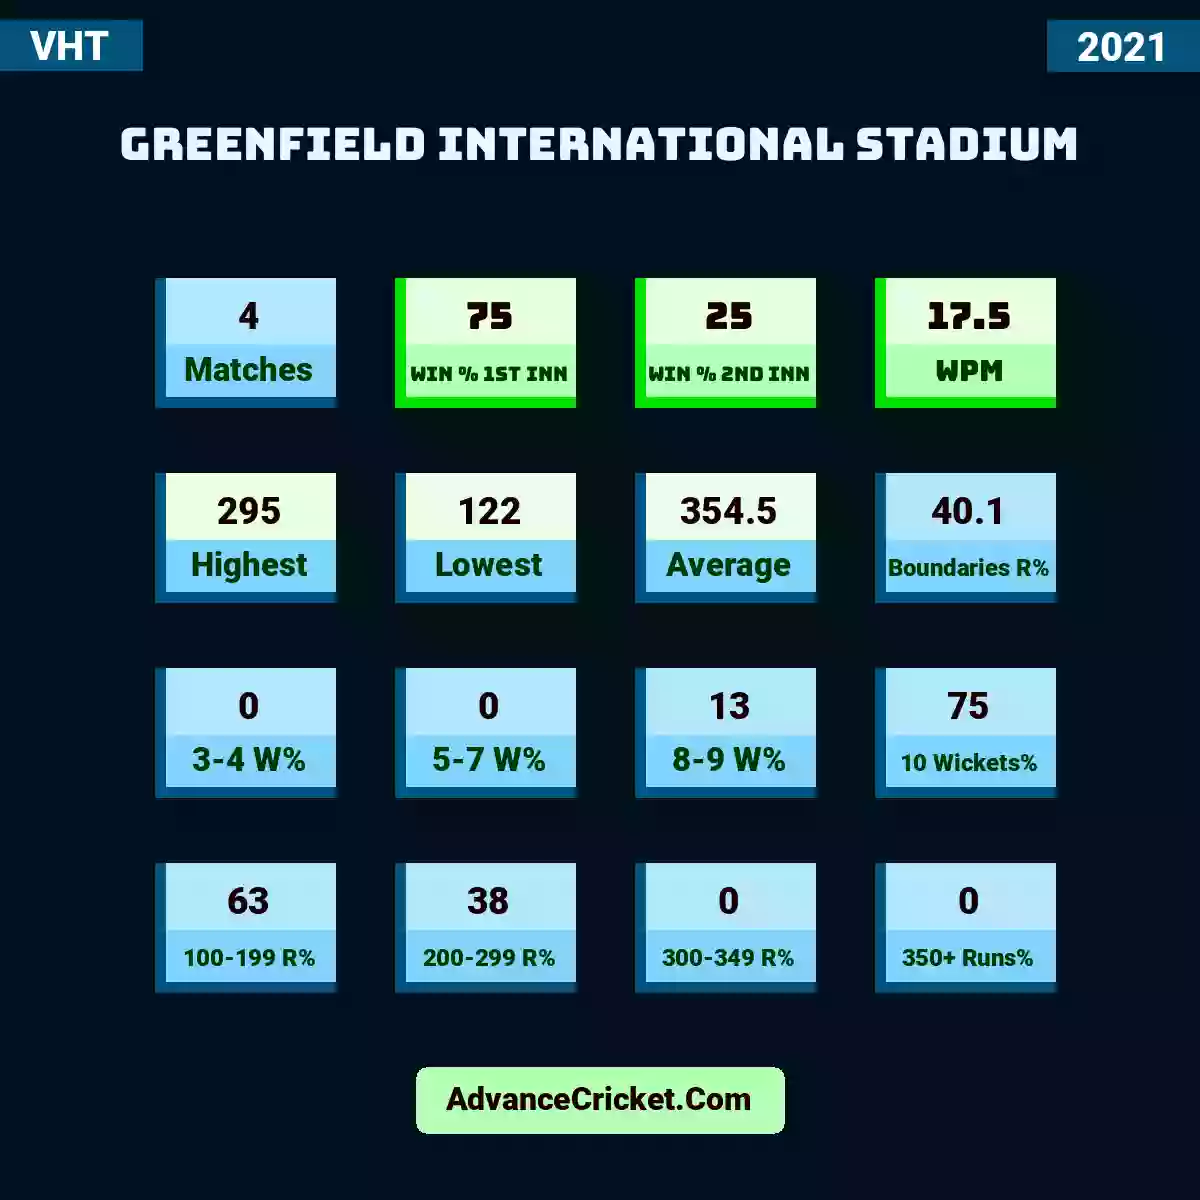 Image showing Greenfield International Stadium with Matches: 4, Win % 1st Inn: 75, Win % 2nd Inn: 25, WPM: 17.5, Highest: 295, Lowest: 122, Average: 354.5, Boundaries R%: 40.1, 3-4 W%: 0, 5-7 W%: 0, 8-9 W%: 13, 10 Wickets%: 75, 100-199 R%: 63, 200-299 R%: 38, 300-349 R%: 0, 350+ Runs%: 0.